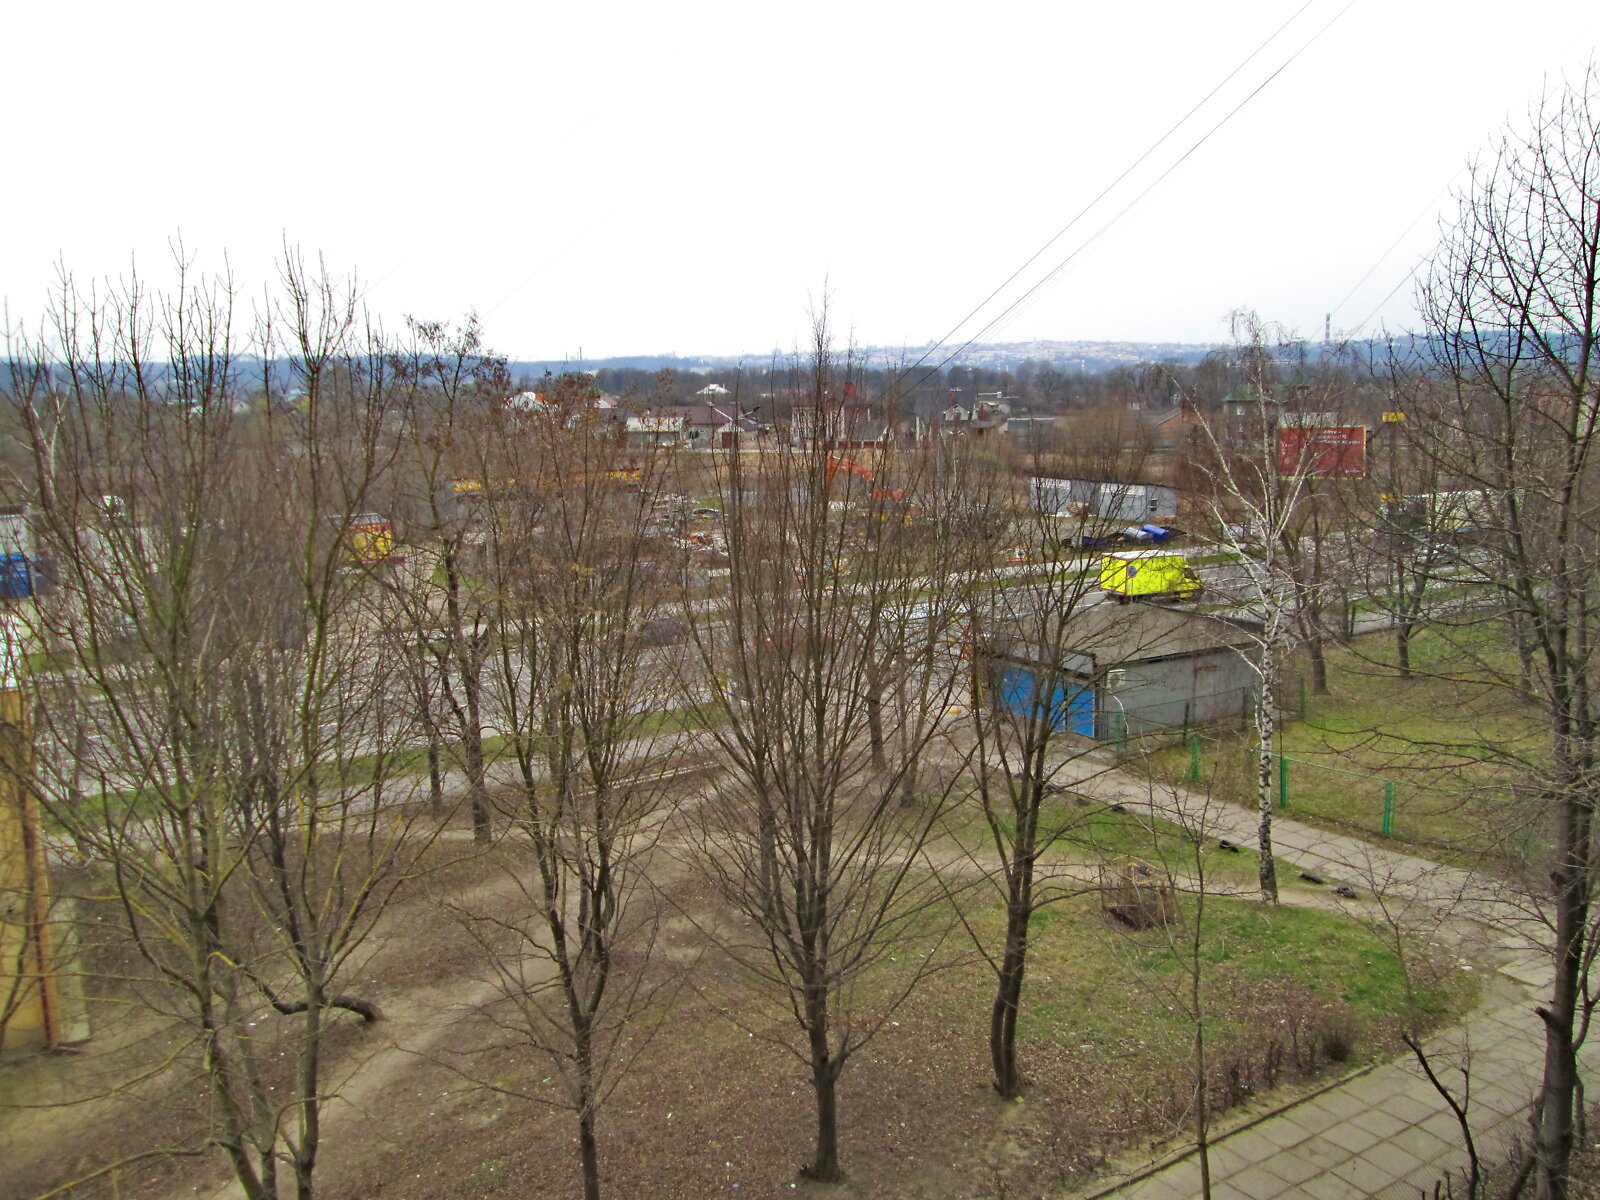 Продажа двухкомнатной квартиры в Черновцах, на ул. Хотинская 47А, район Хотинский фото 1